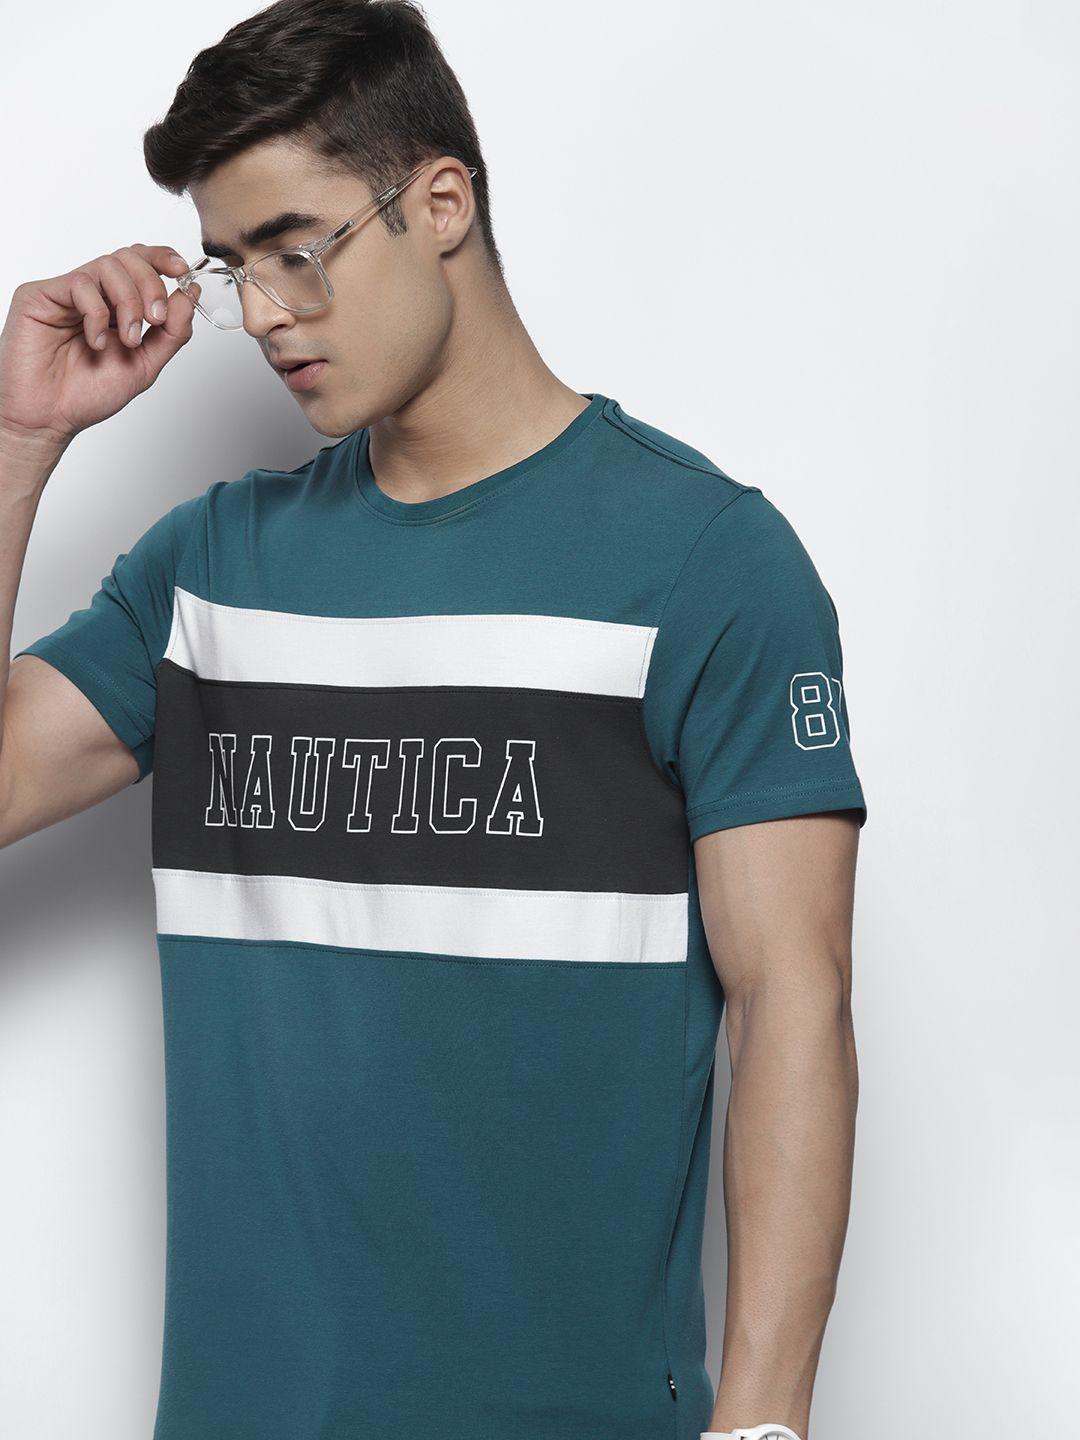 nautica striped brand logo detailed regular fit t-shirt